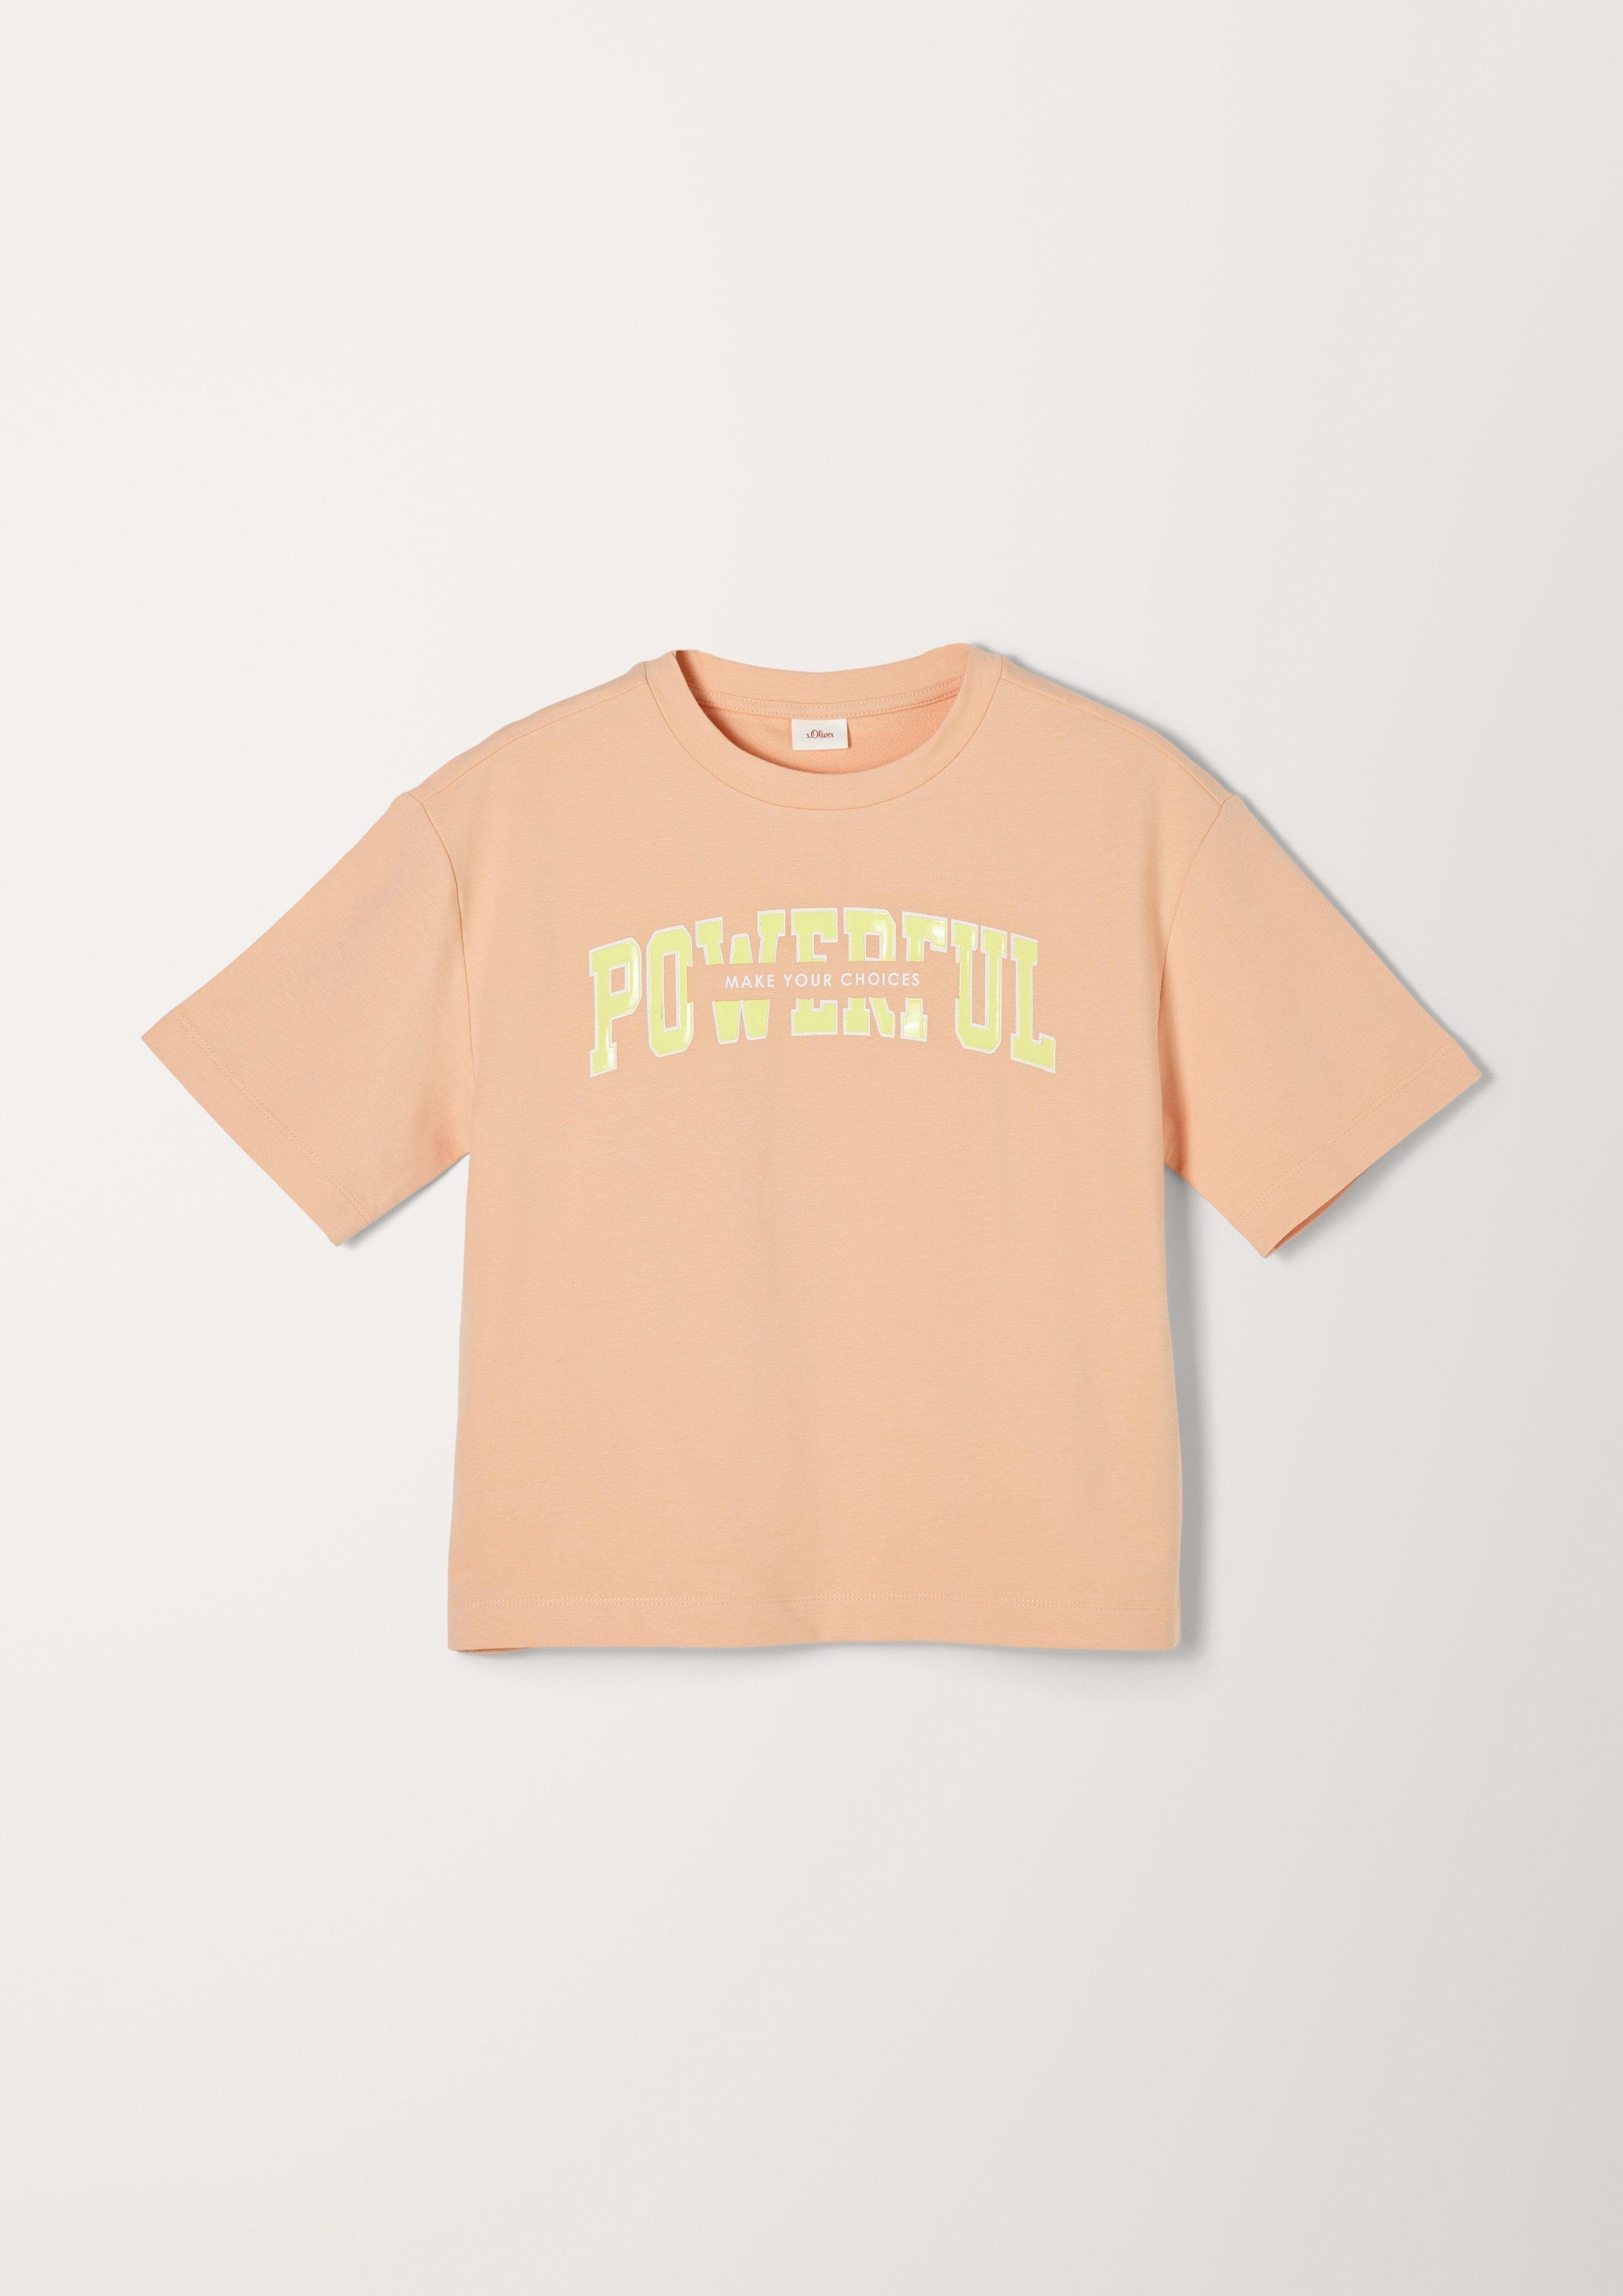 s.Oliver Kurzarmshirt T-Shirt mit Statementprint peach